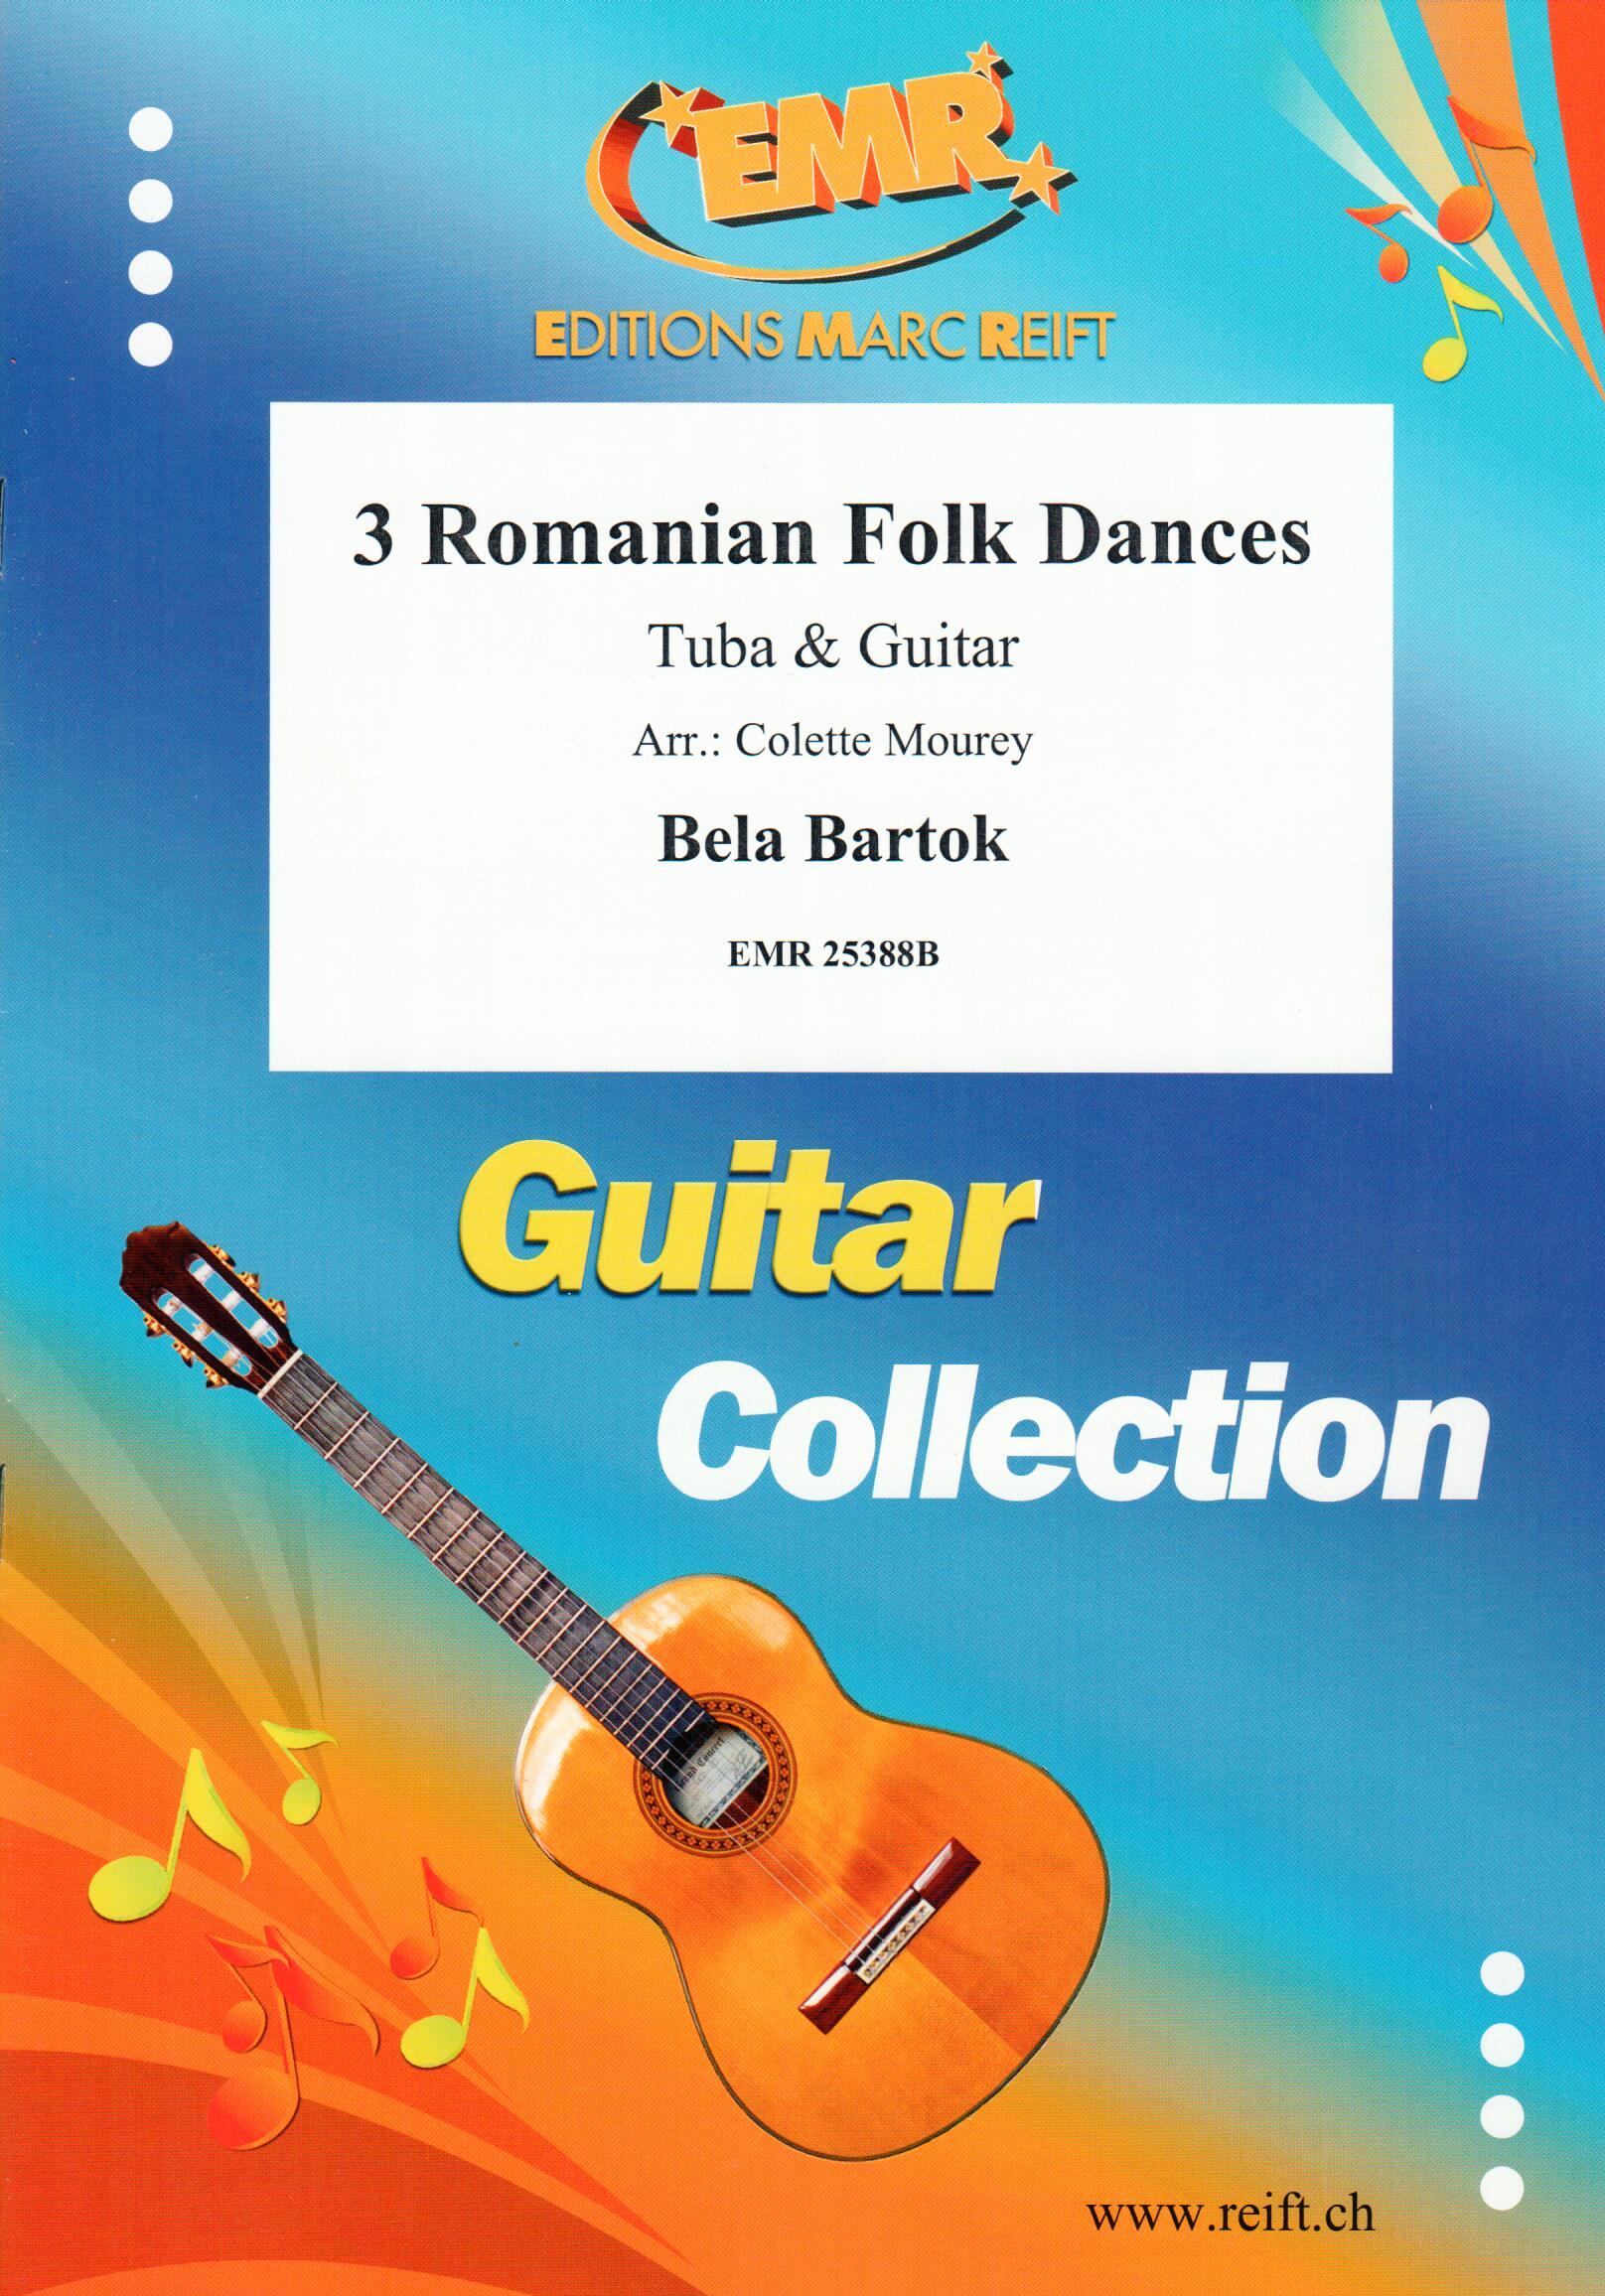 3 ROMANIAN FOLK DANCES